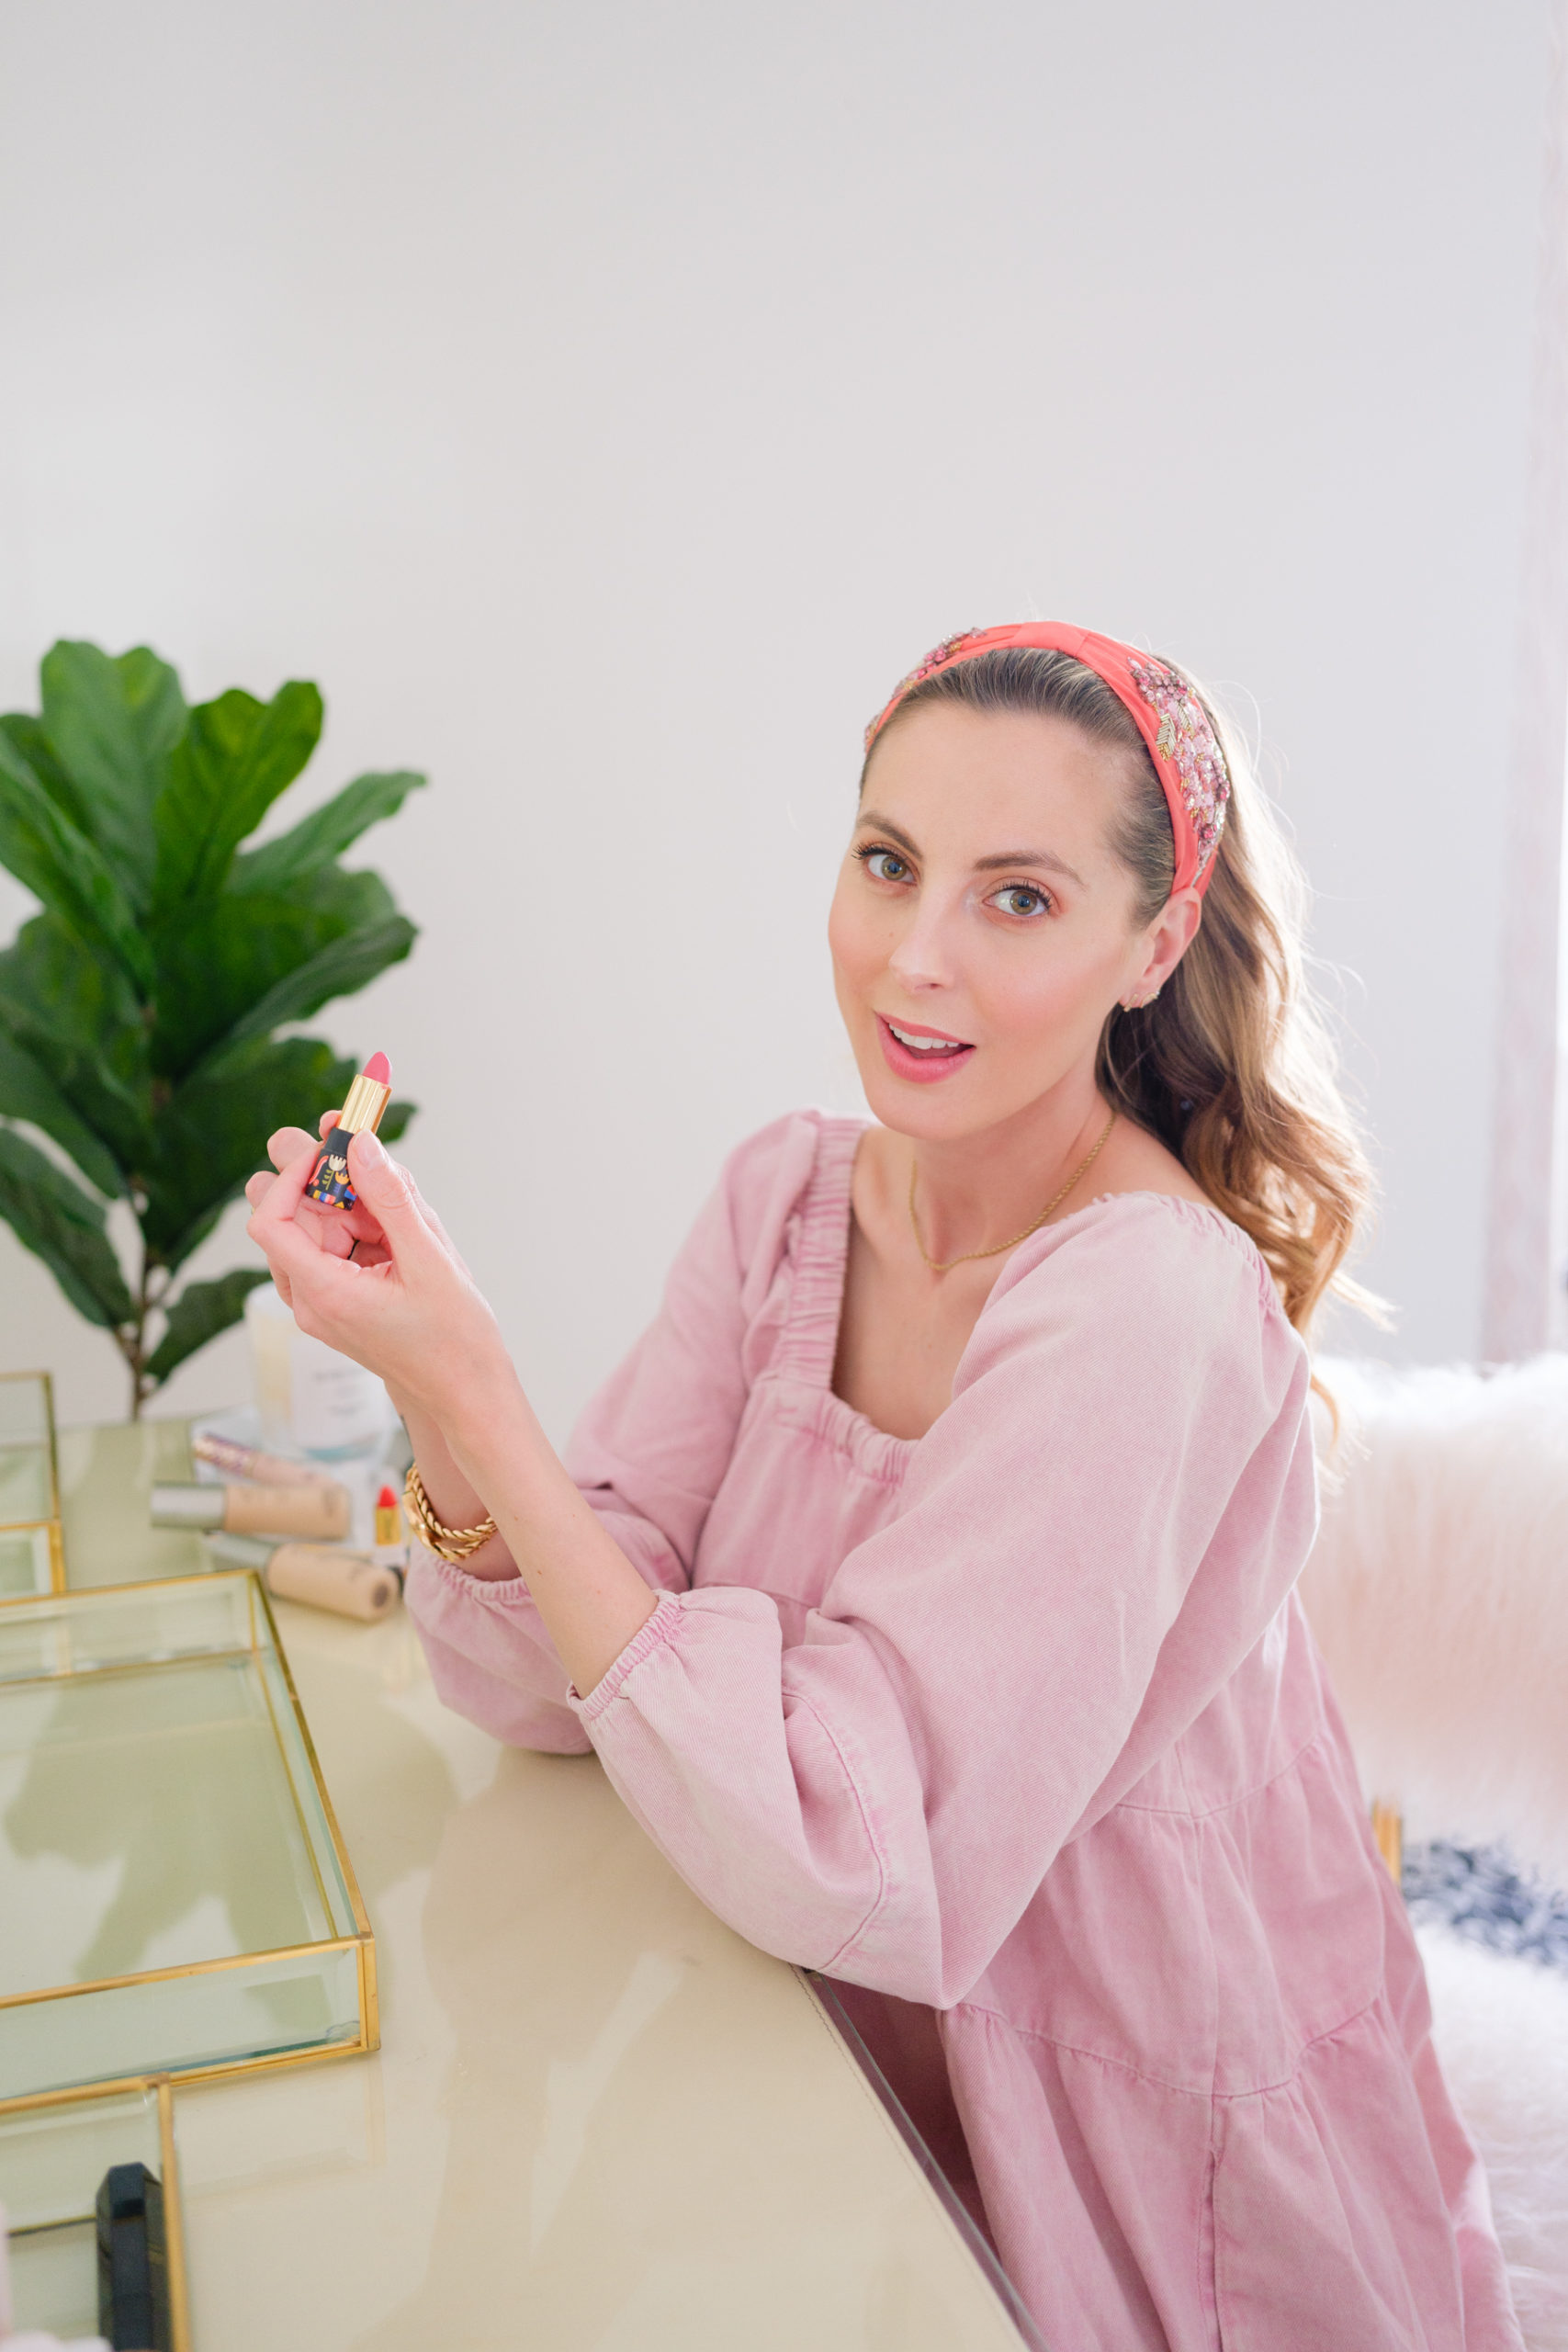 Eva Amurri shares her favorite clean makeup brands